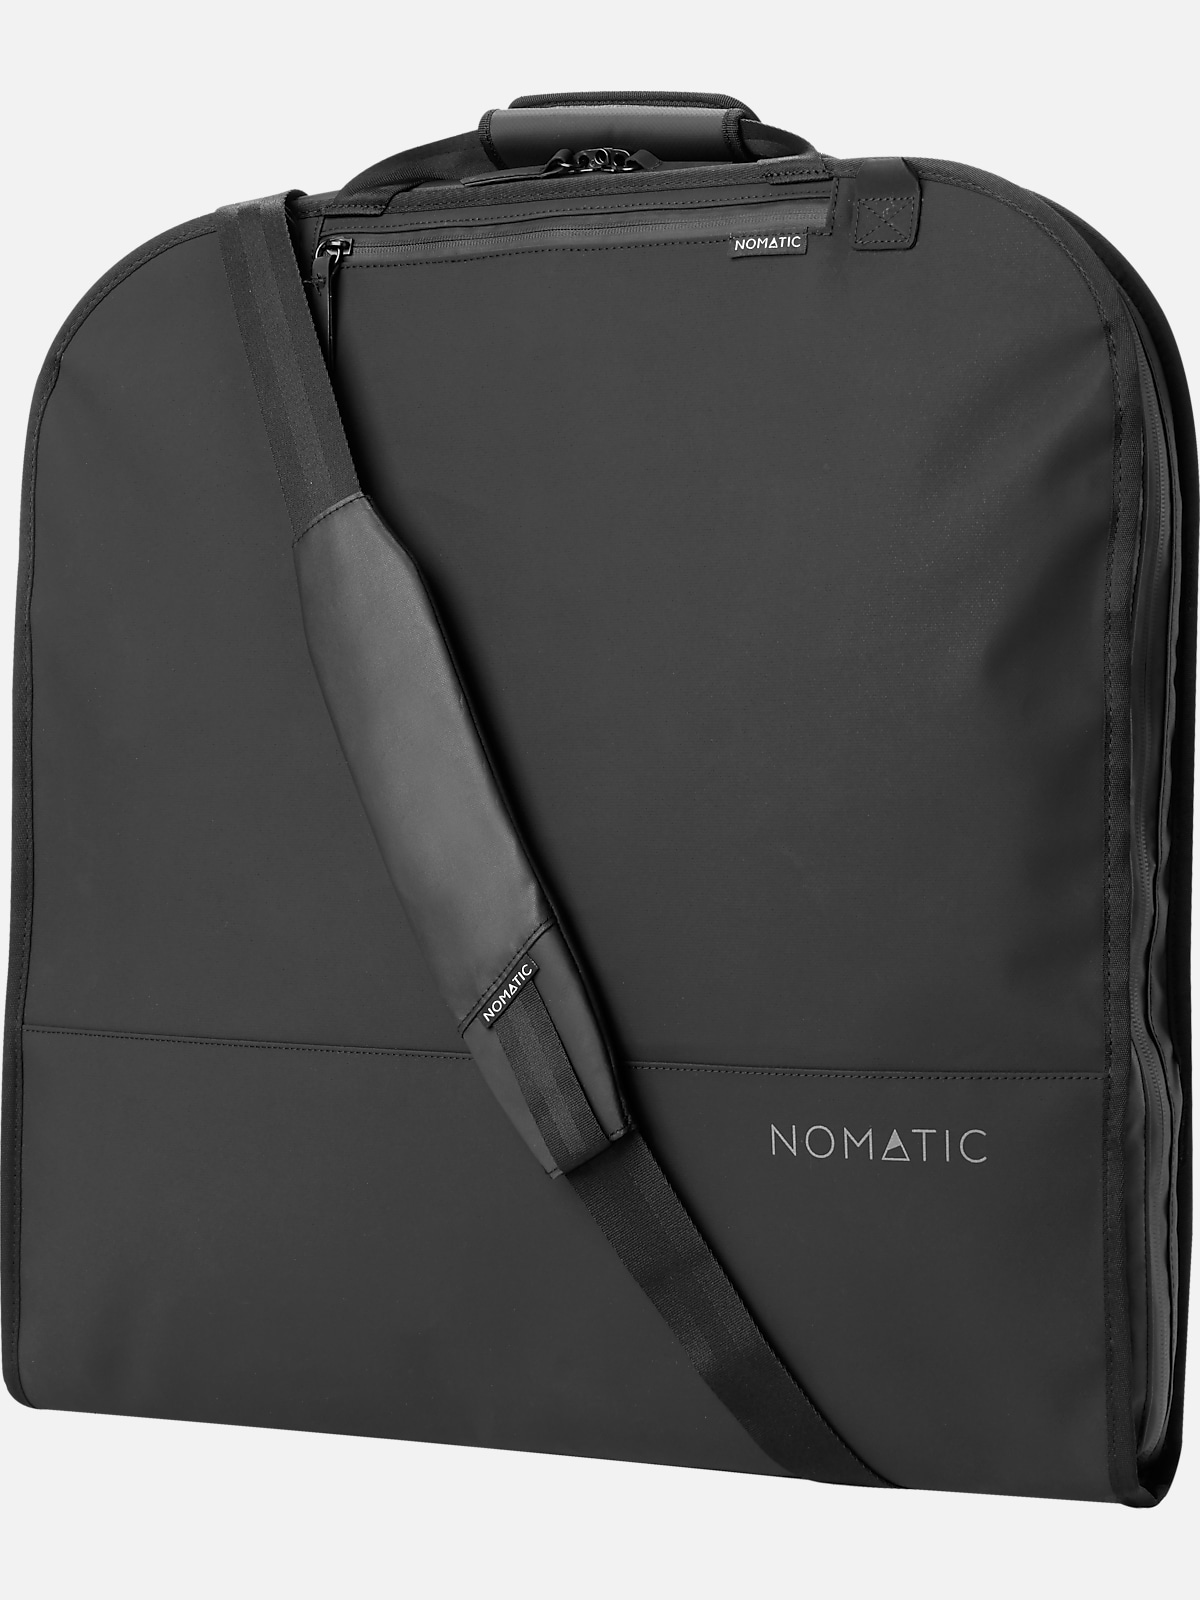 Nomatic Garment Bag, All Sale